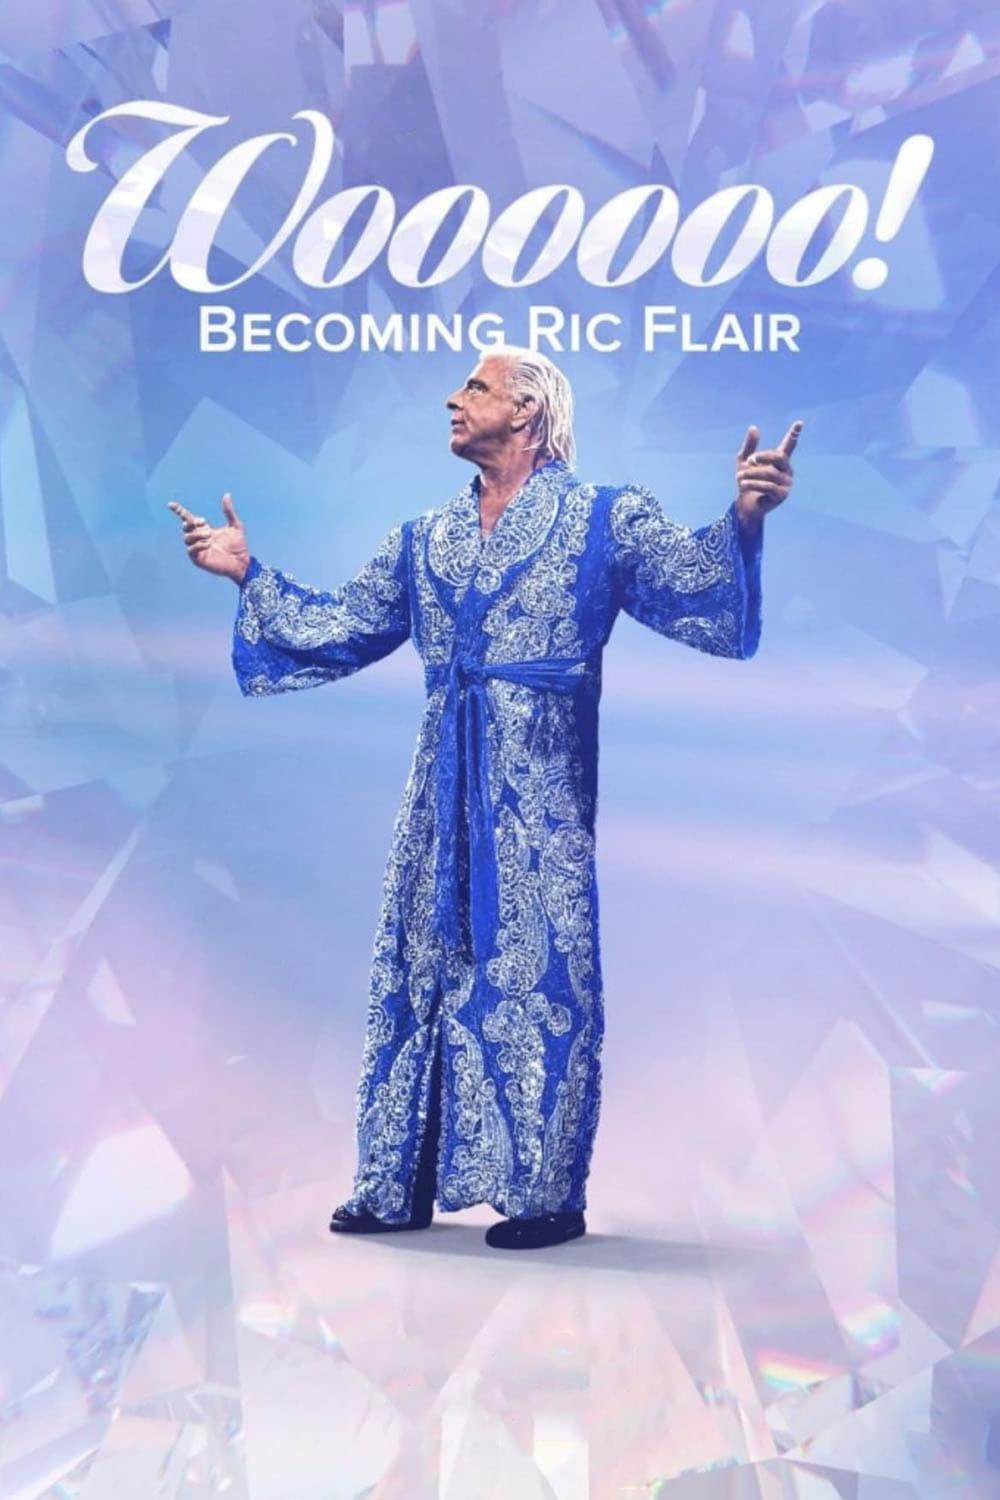 Woooooo! Becoming Ric Flair poster